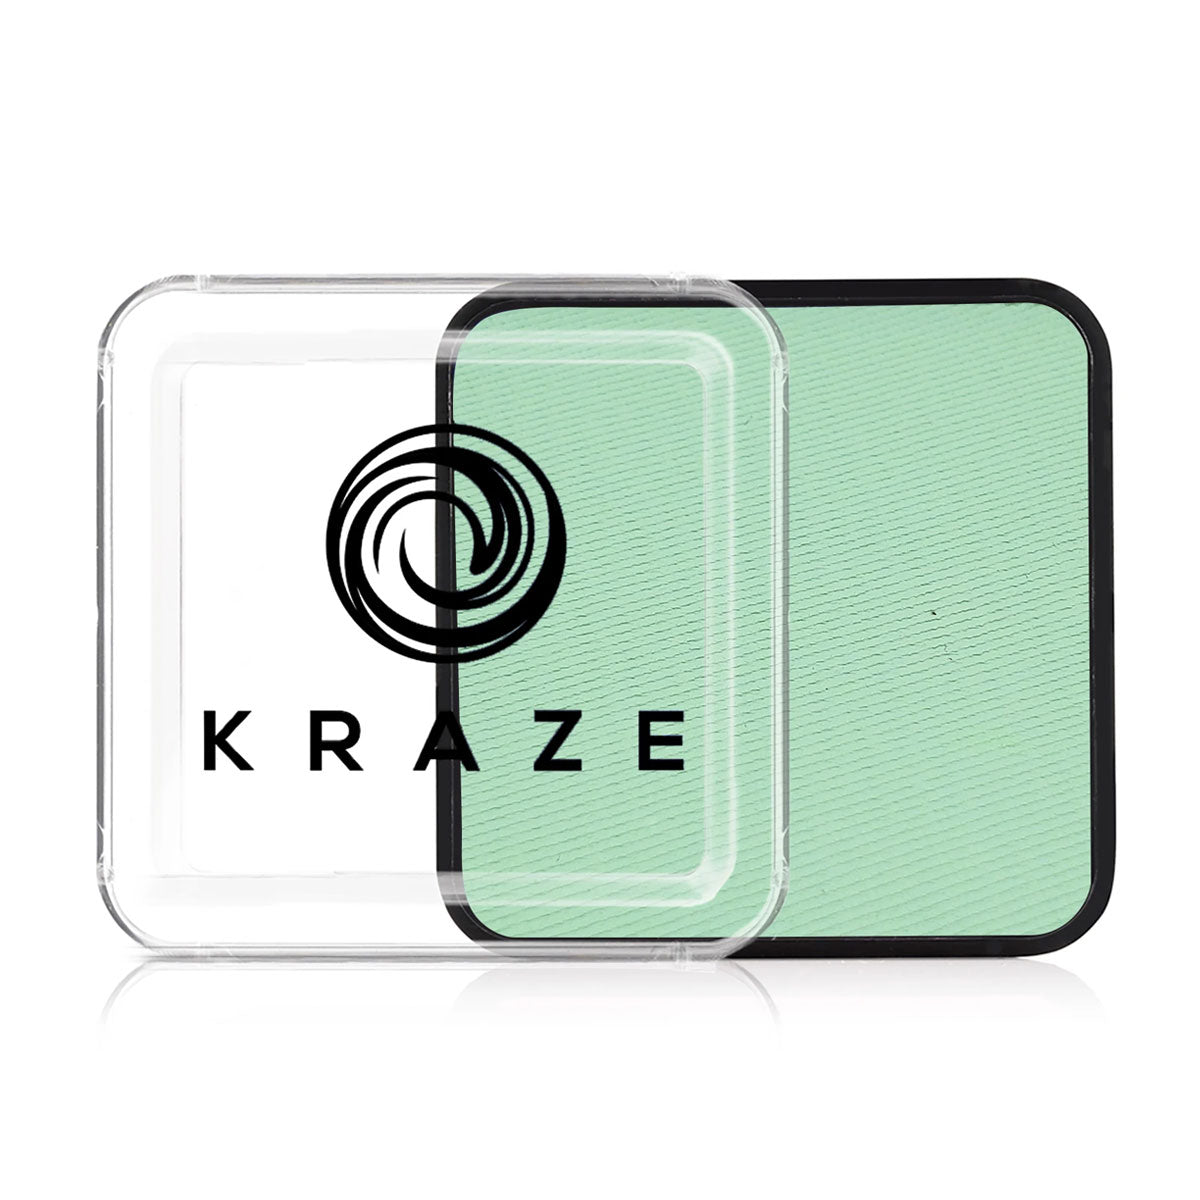 Mint Green Square 25g - Kraze